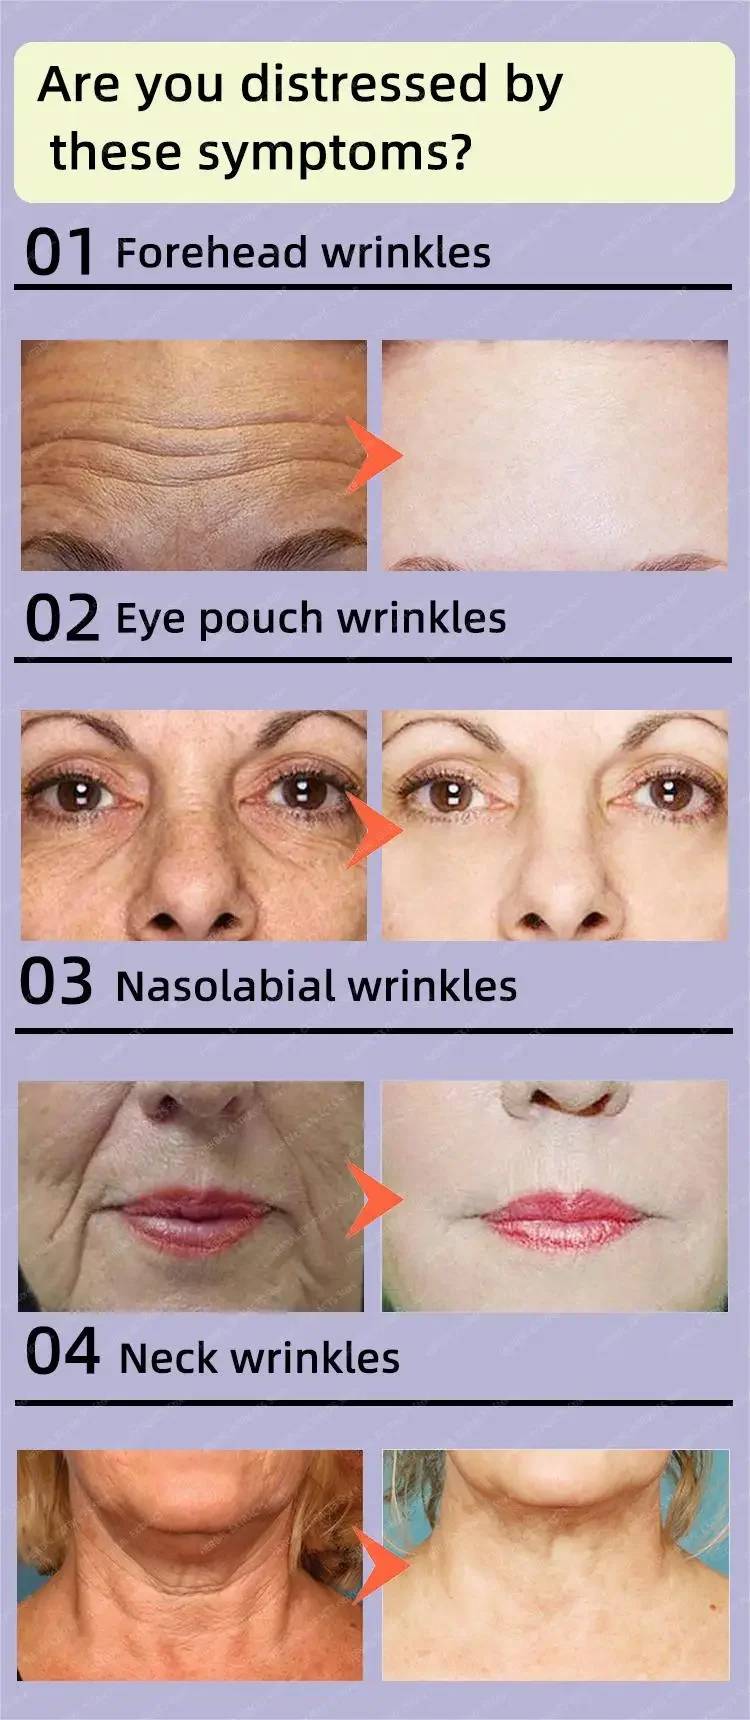 Fashionsarah.com Fashionsarah.com Anti-aging serum wrinkle remover